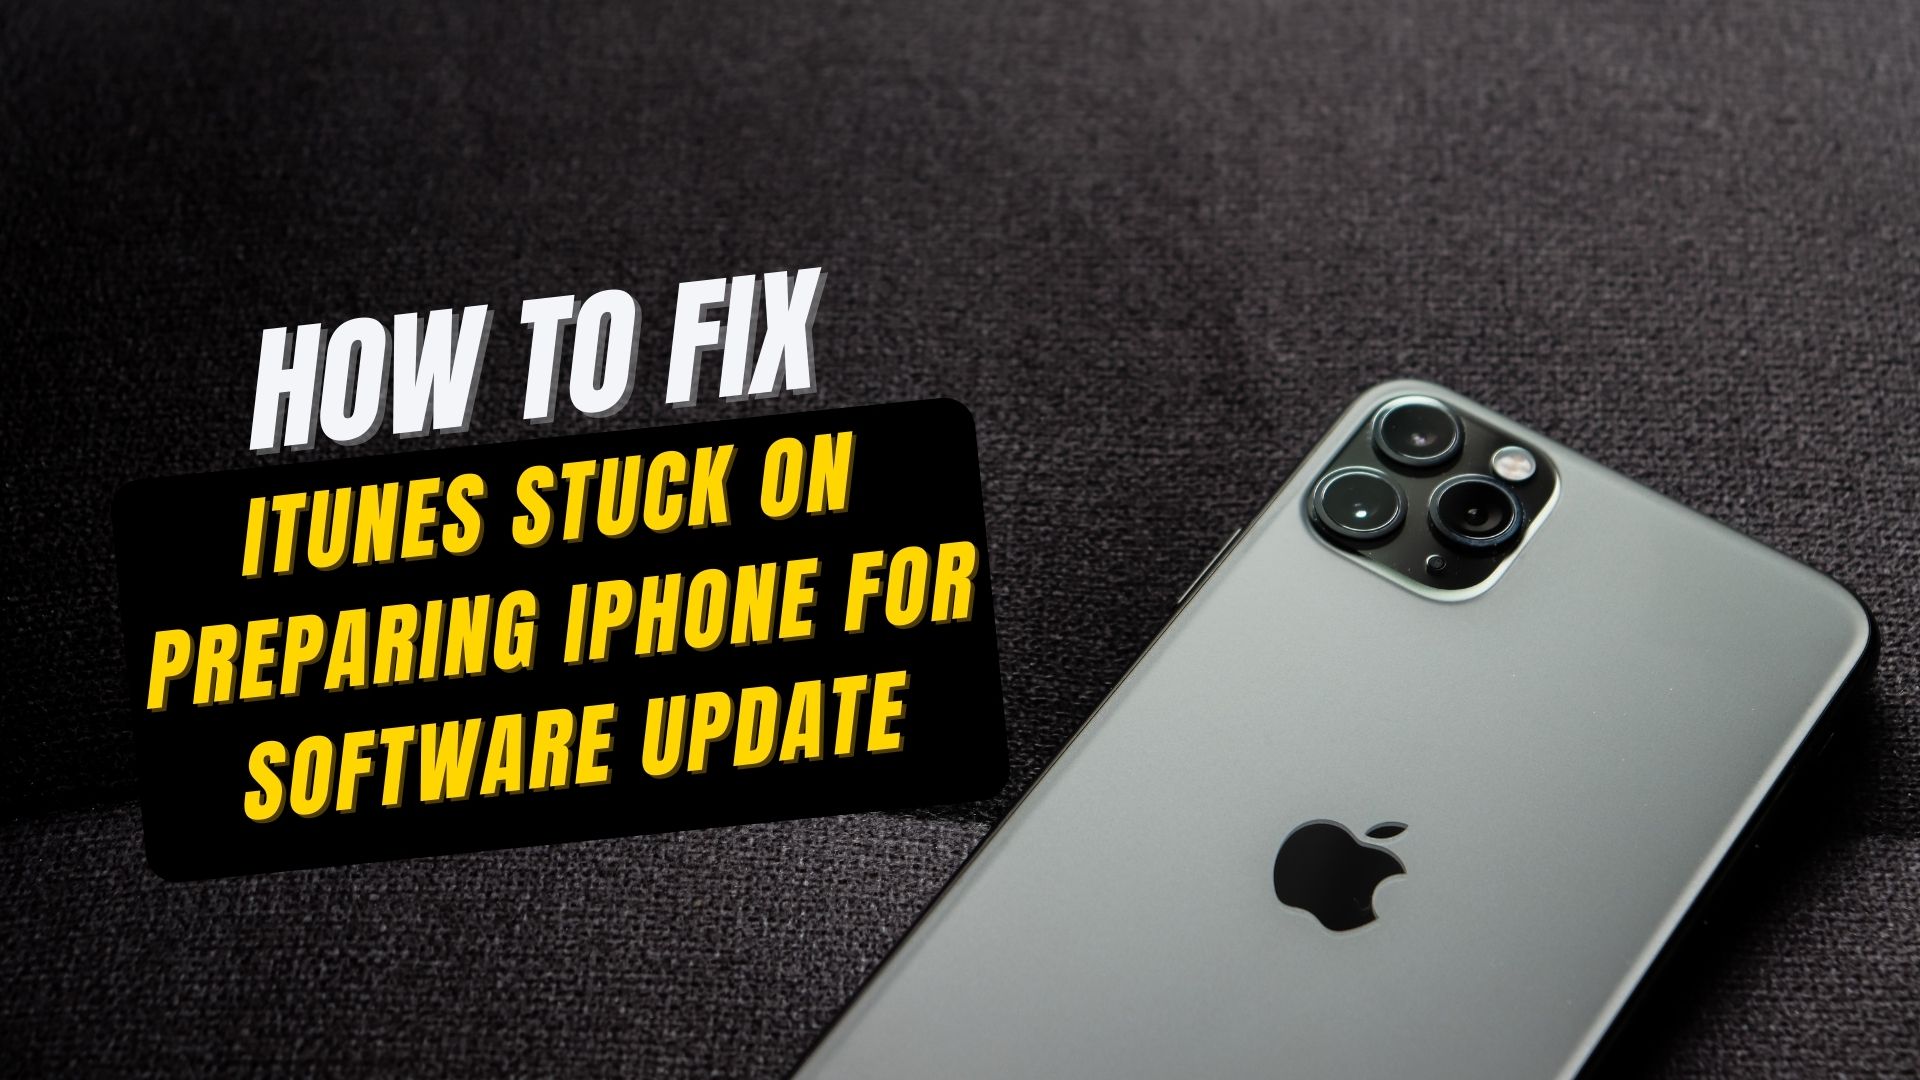 Fix iTunes Stuck on Preparing iPhone for Software Update